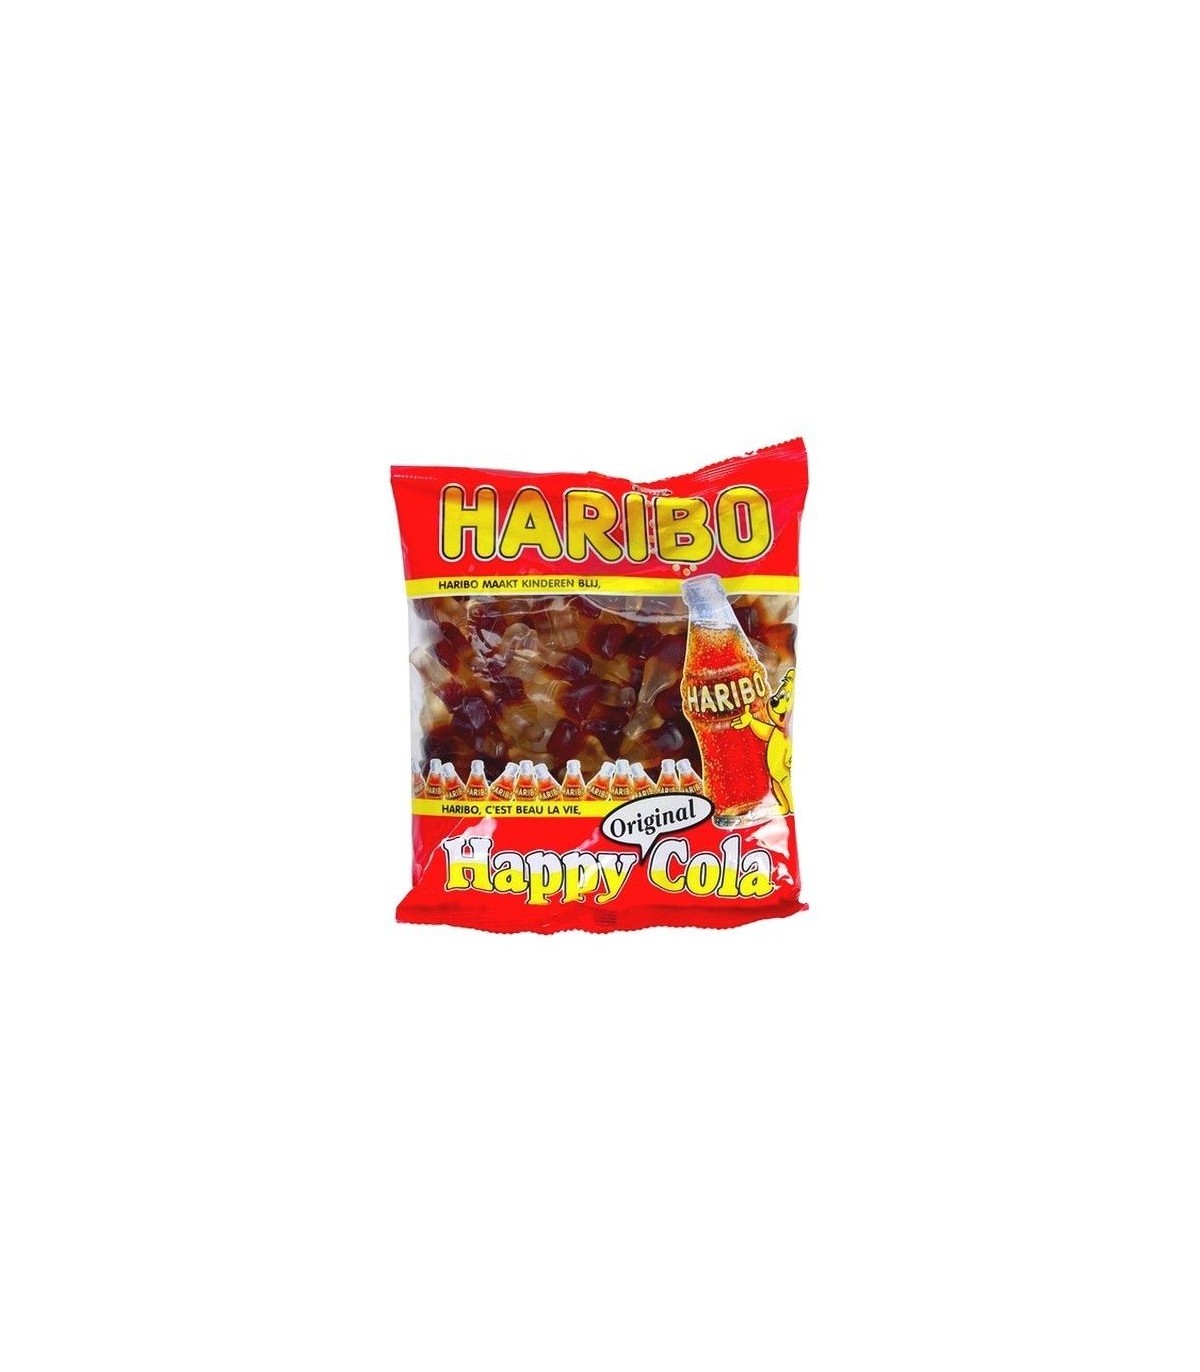 Happy Cola Boite, bonbon cola Haribo, happy cola Haribo,bonbon